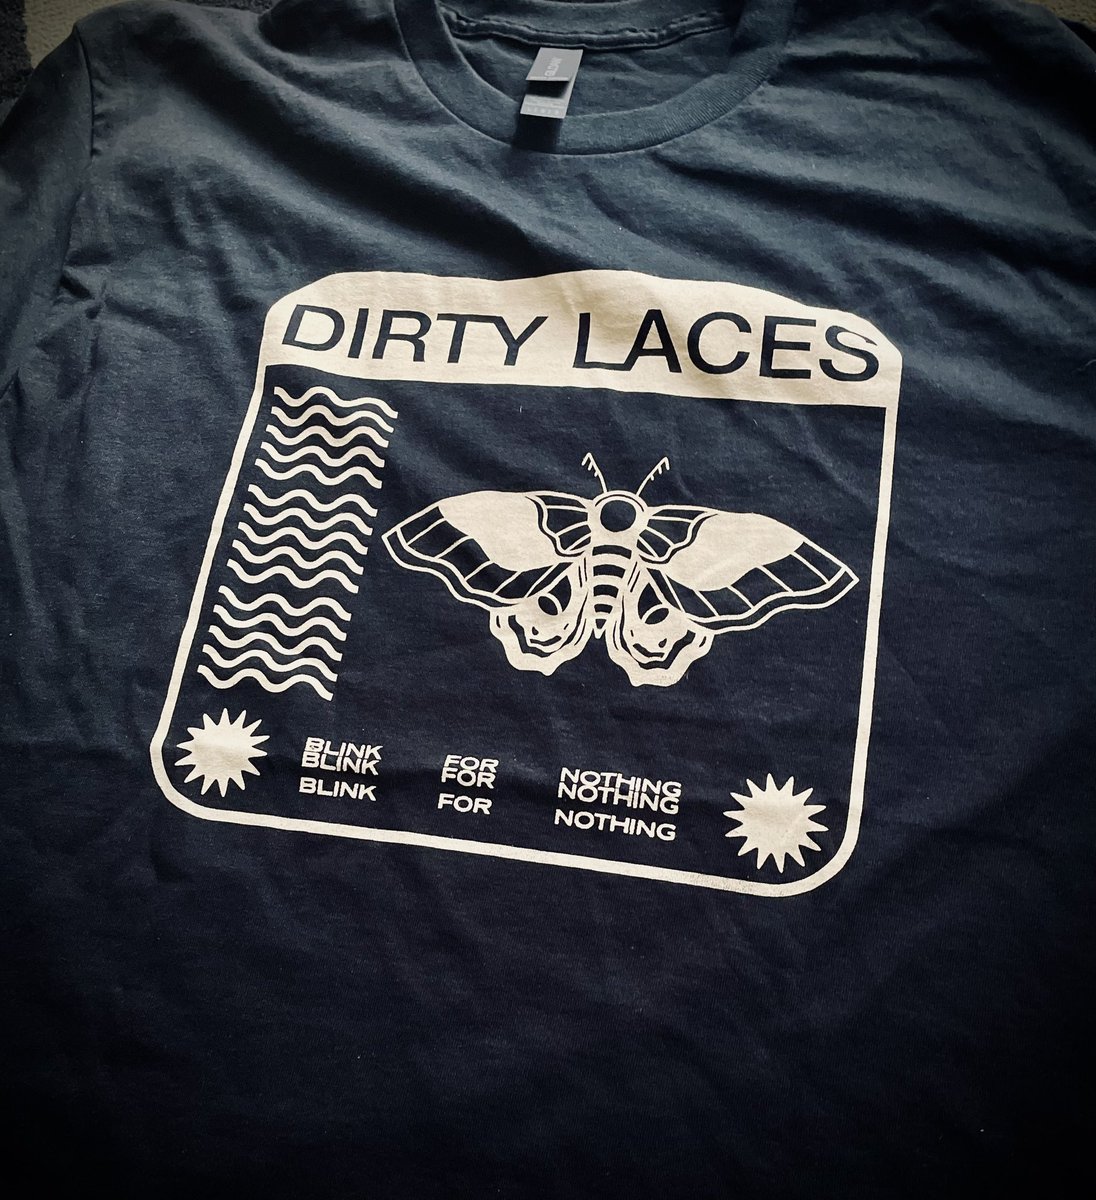 Loving the new @DirtyLacesBand t shirt, great stuff lads.